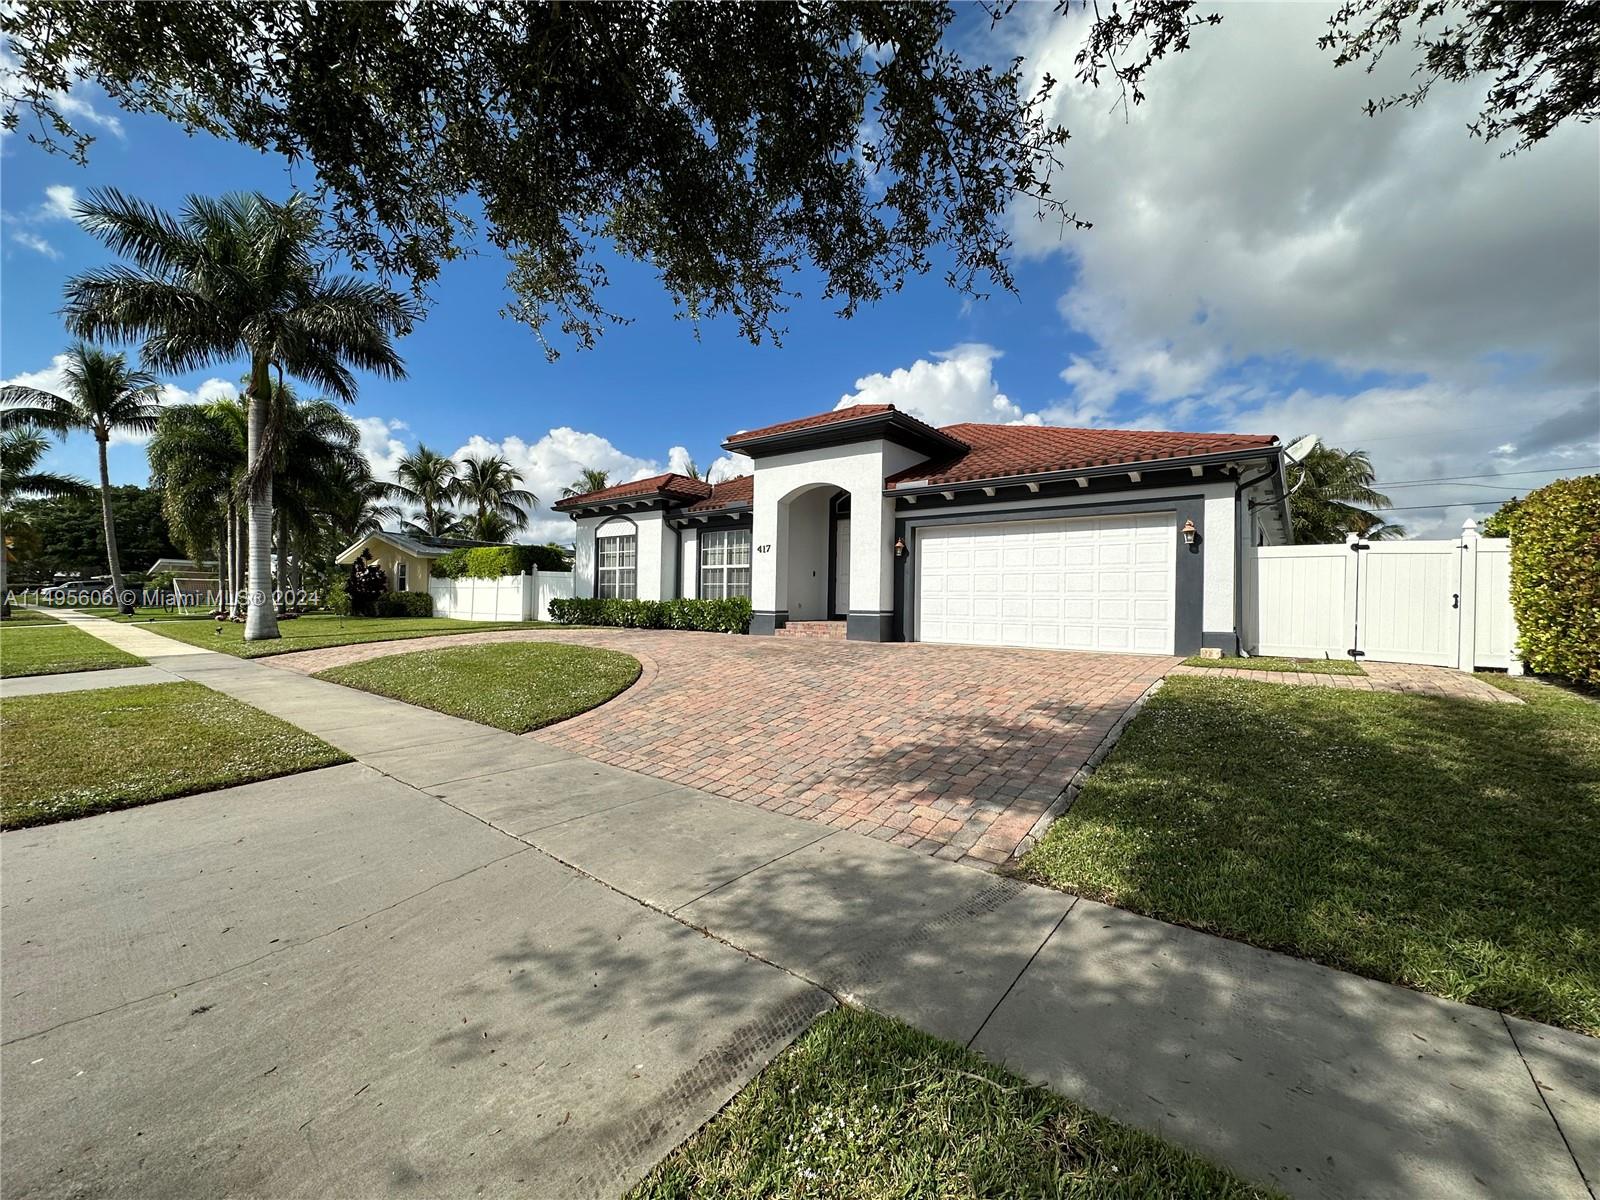 Rental Property at 417 Flotilla Rd Rd 417, North Palm Beach, Palm Beach County, Florida - Bedrooms: 4 
Bathrooms: 3  - $5,900 MO.